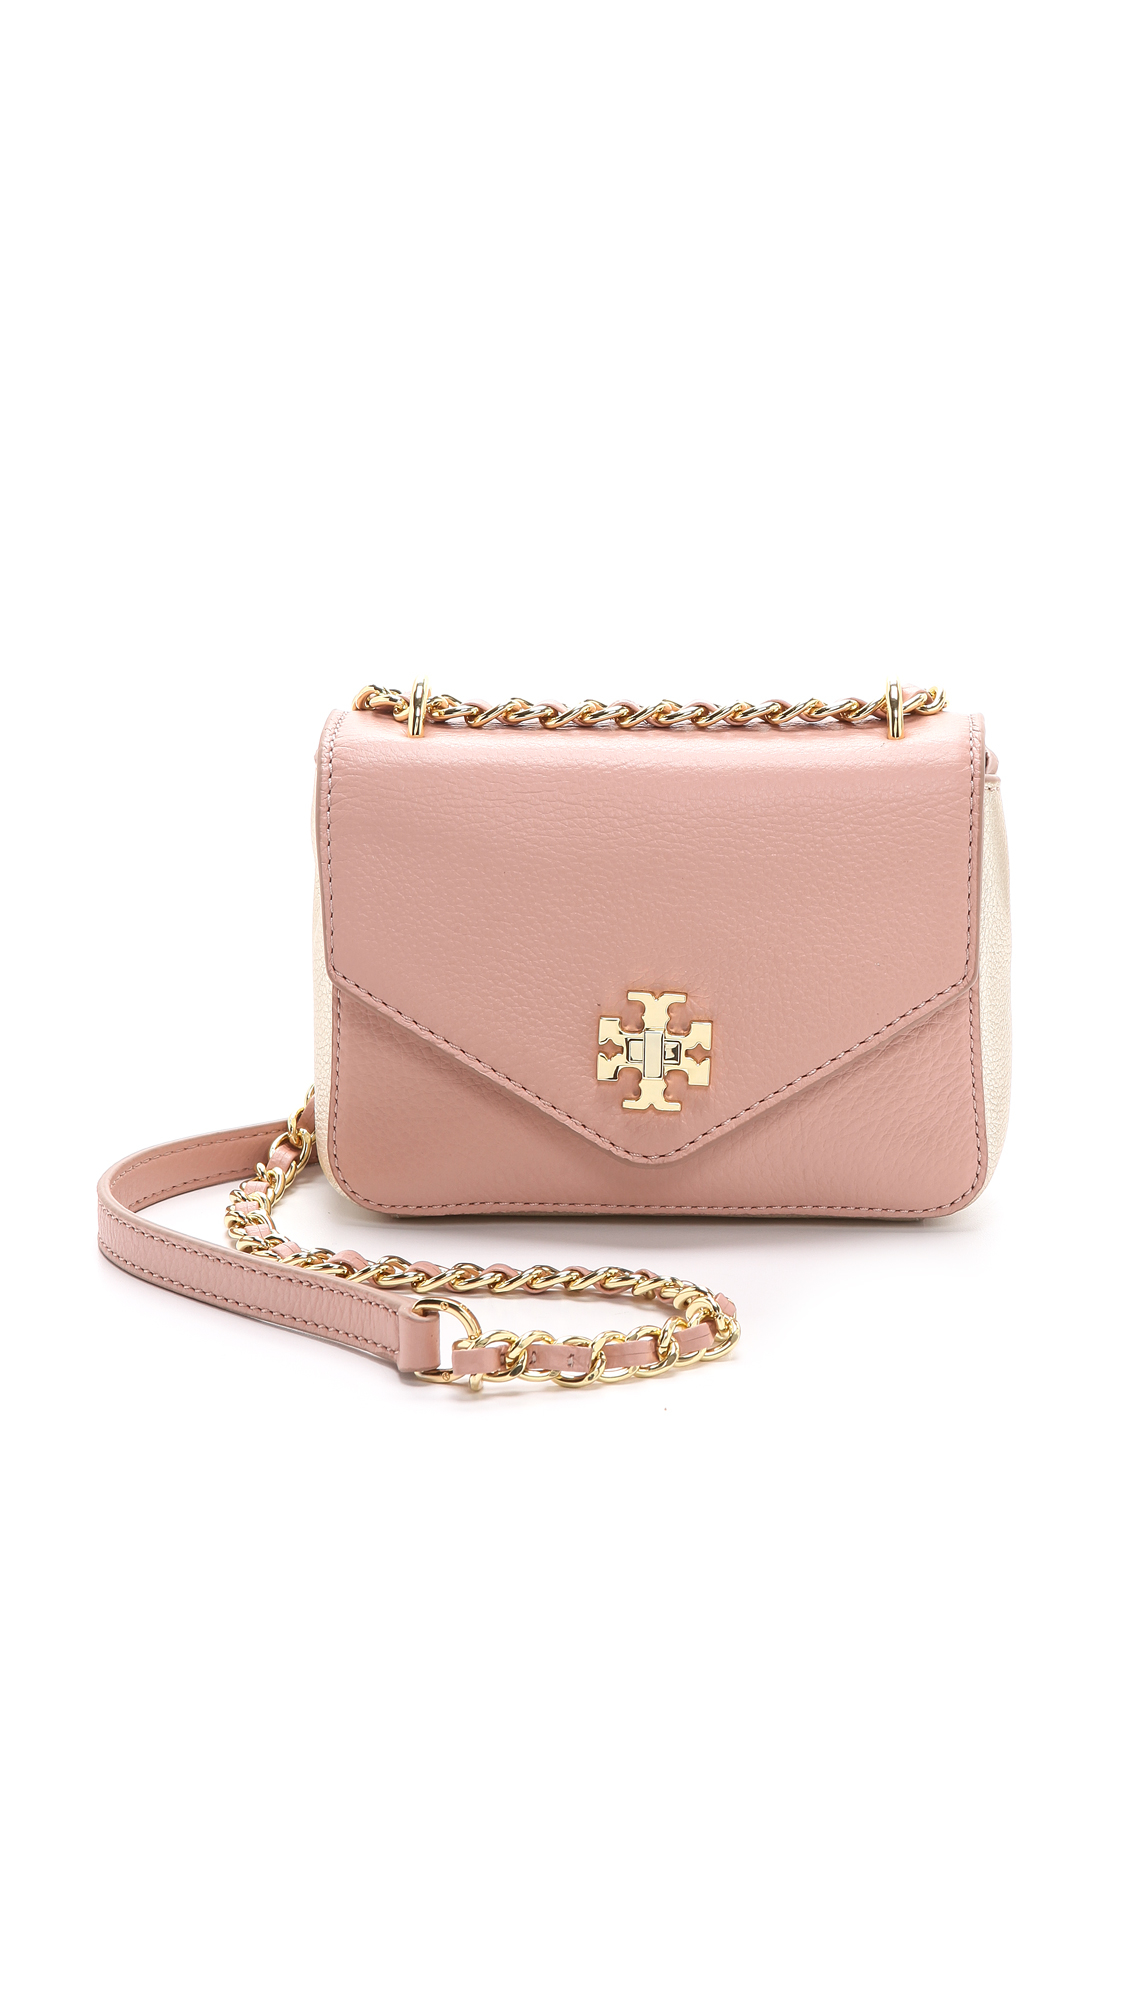 Tory Burch Kira Mini Chain Bag - Indian Rose/Champagne Gold in Pink | Lyst